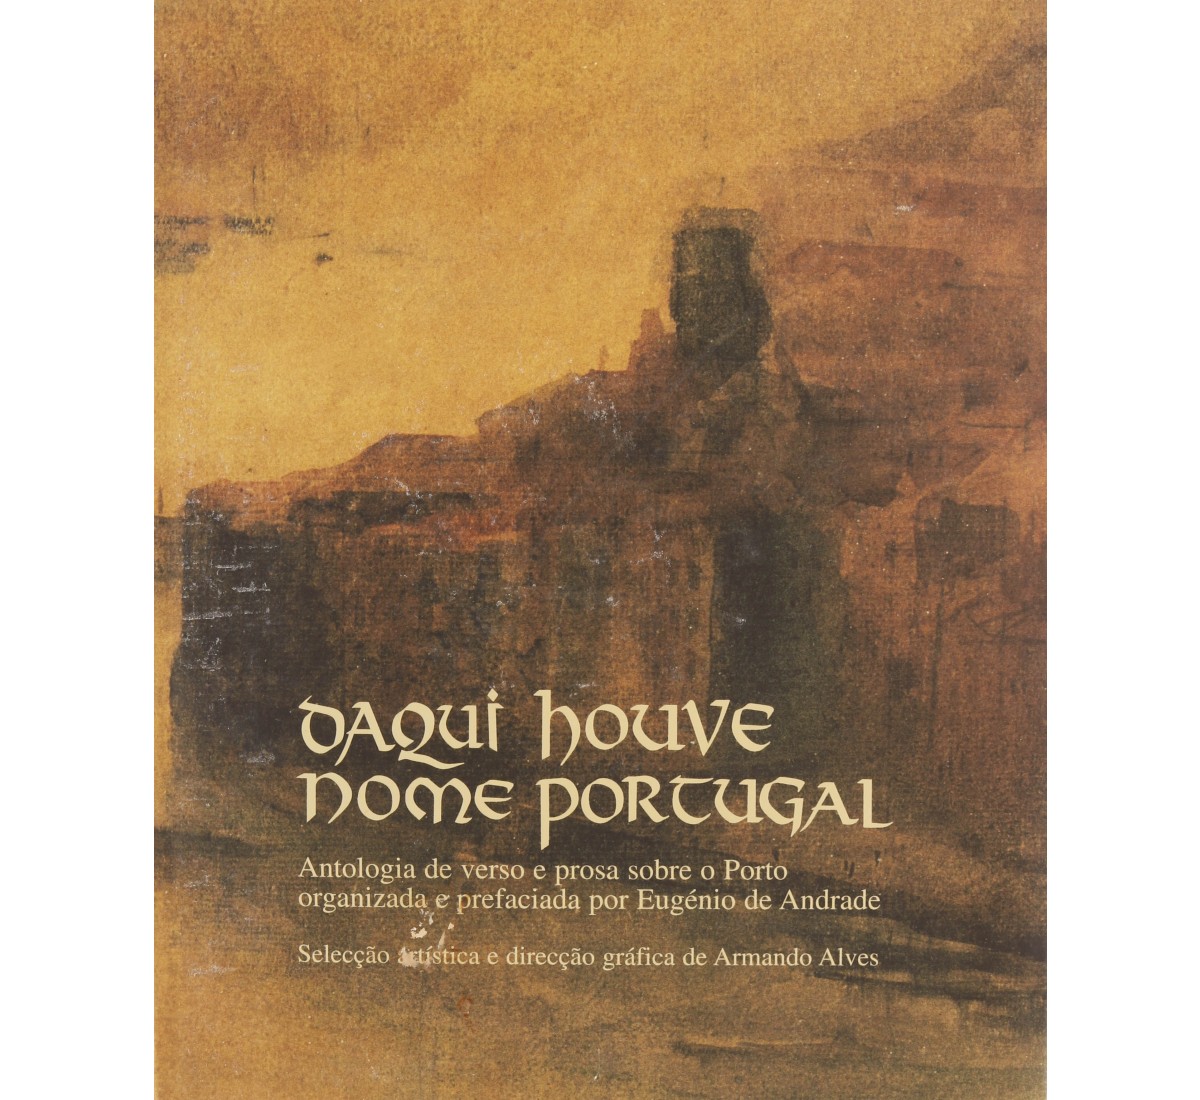 DAQUI HOUVE NOME PORTUGAL